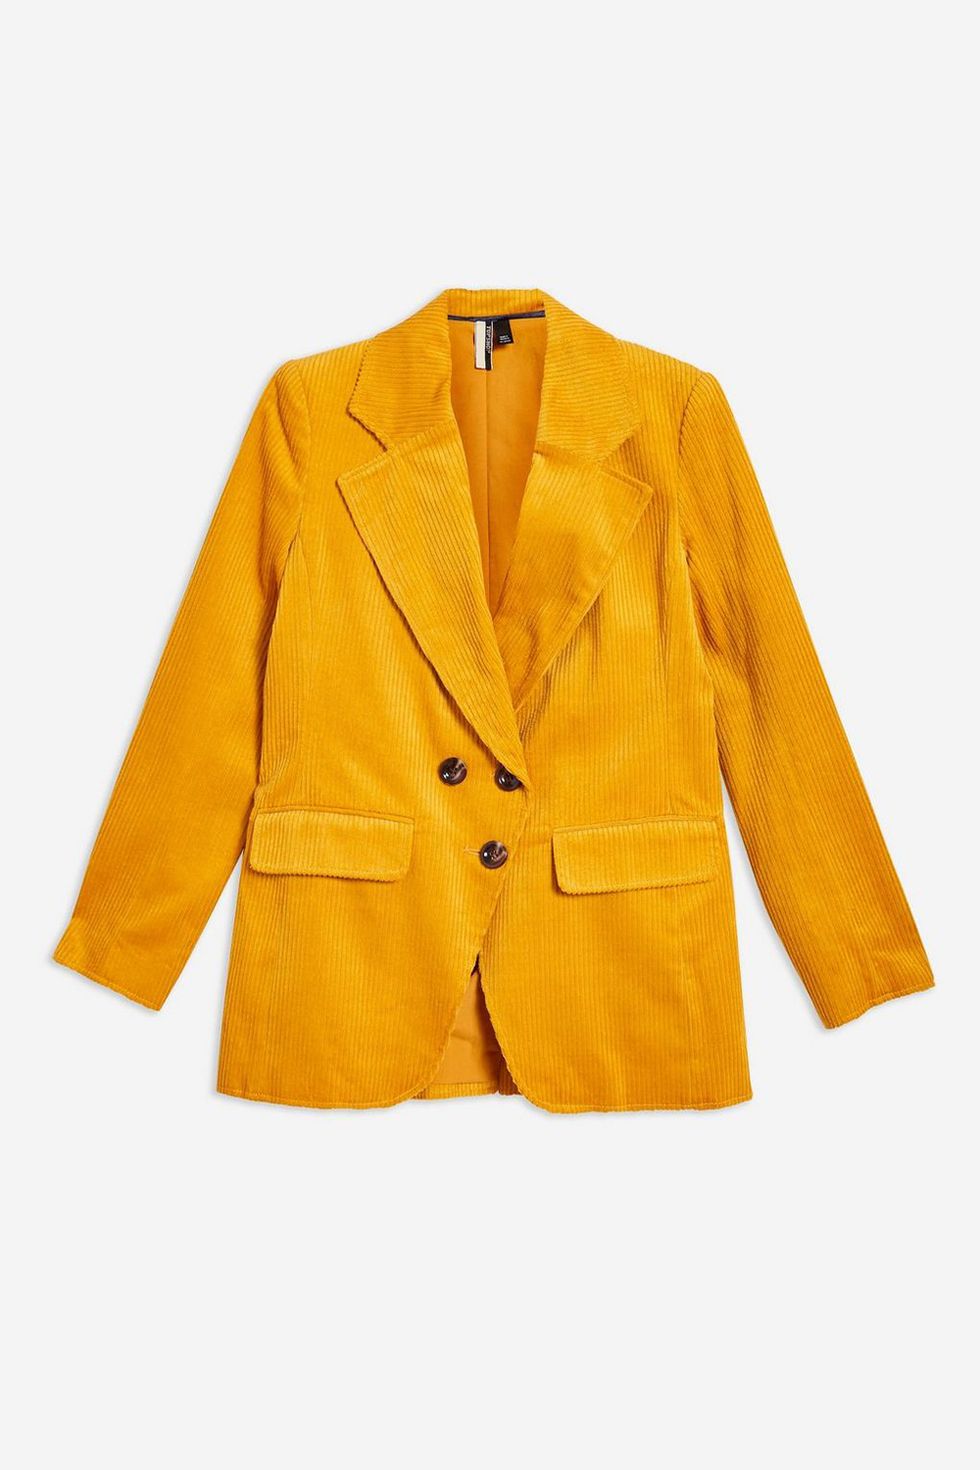 Clothing, Outerwear, Yellow, Blazer, Jacket, Orange, Sleeve, Button, Top, Suit, 